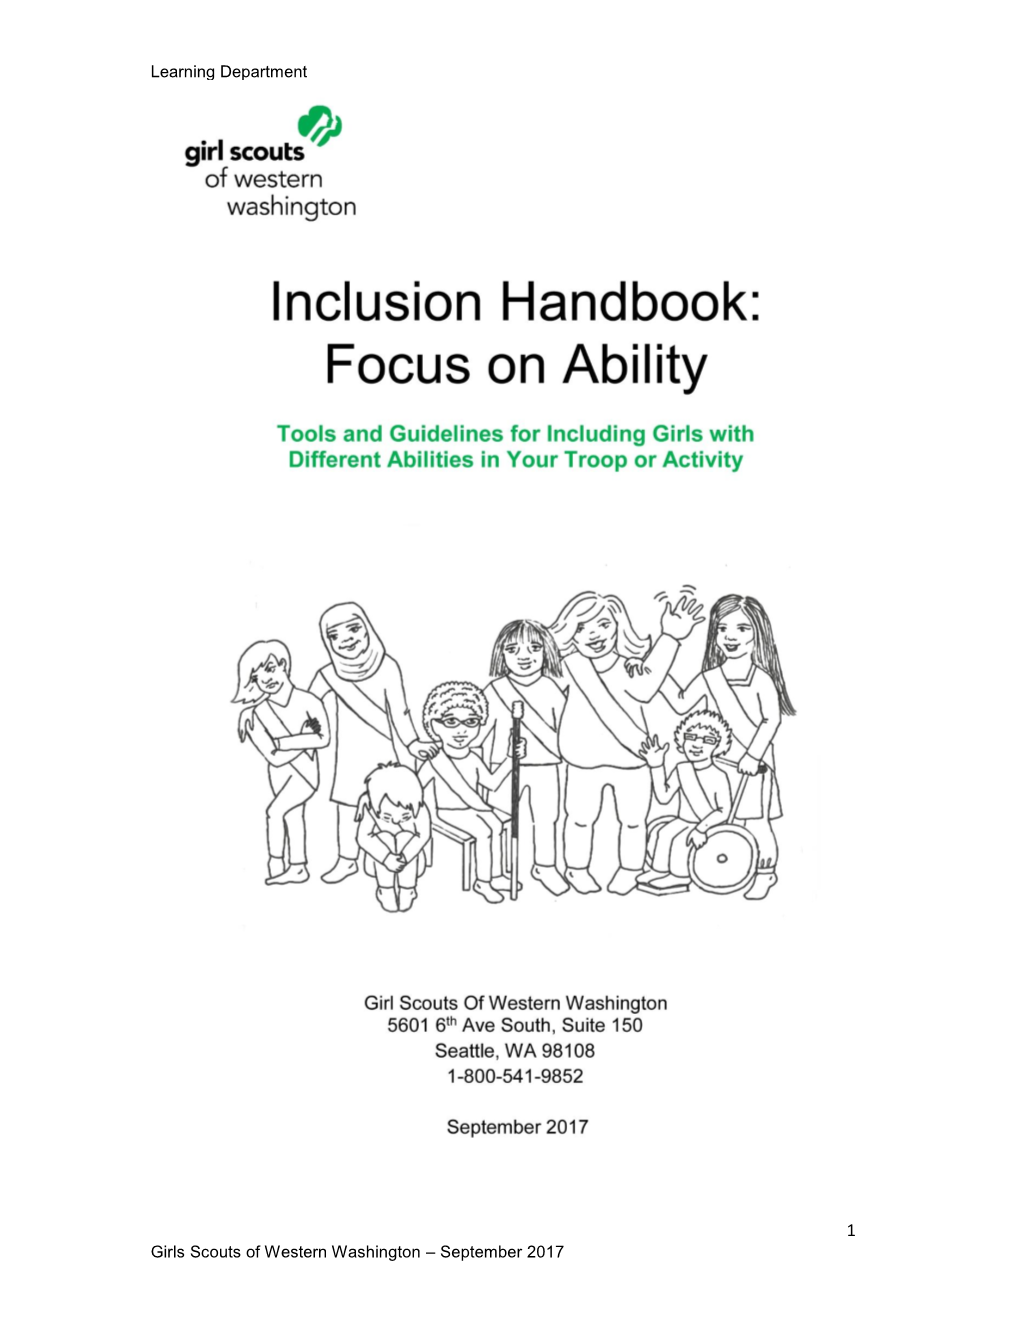 Inclusion Handbook: Focus on Ability